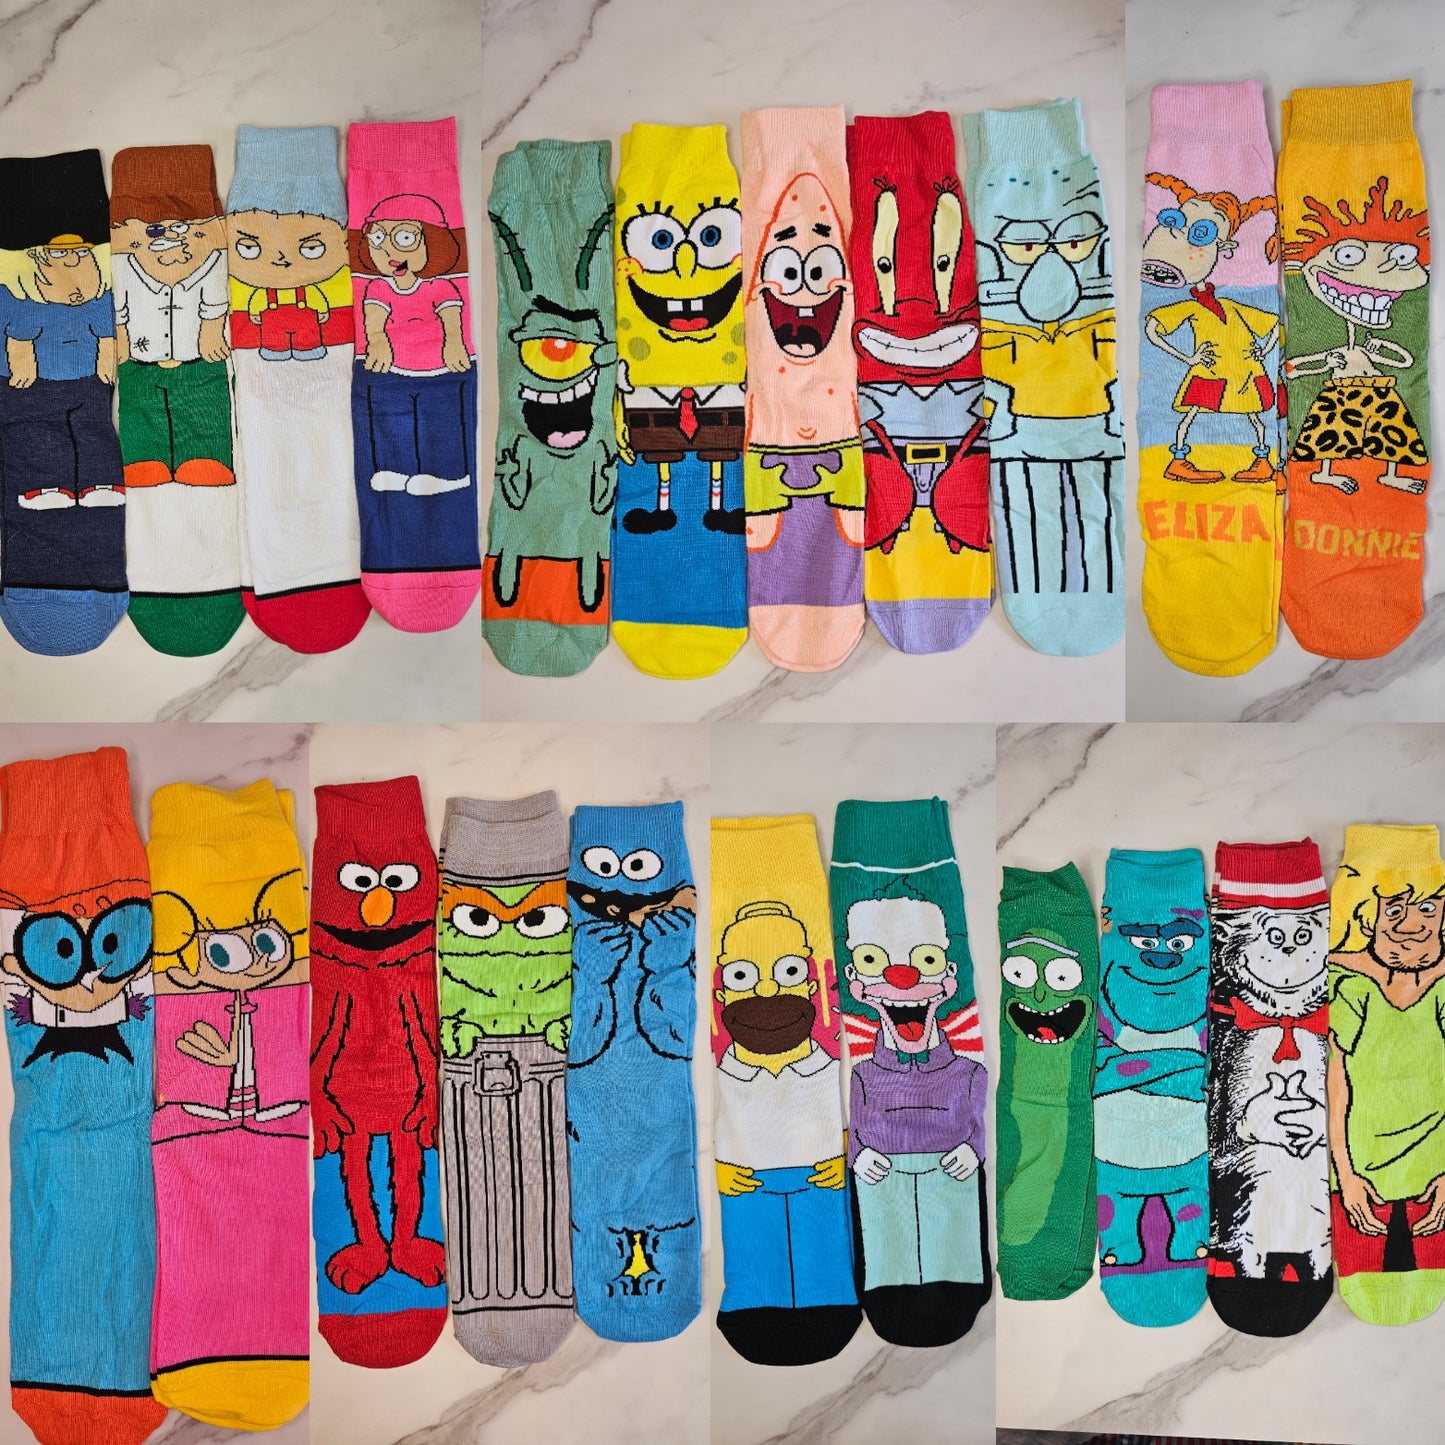 Character socks